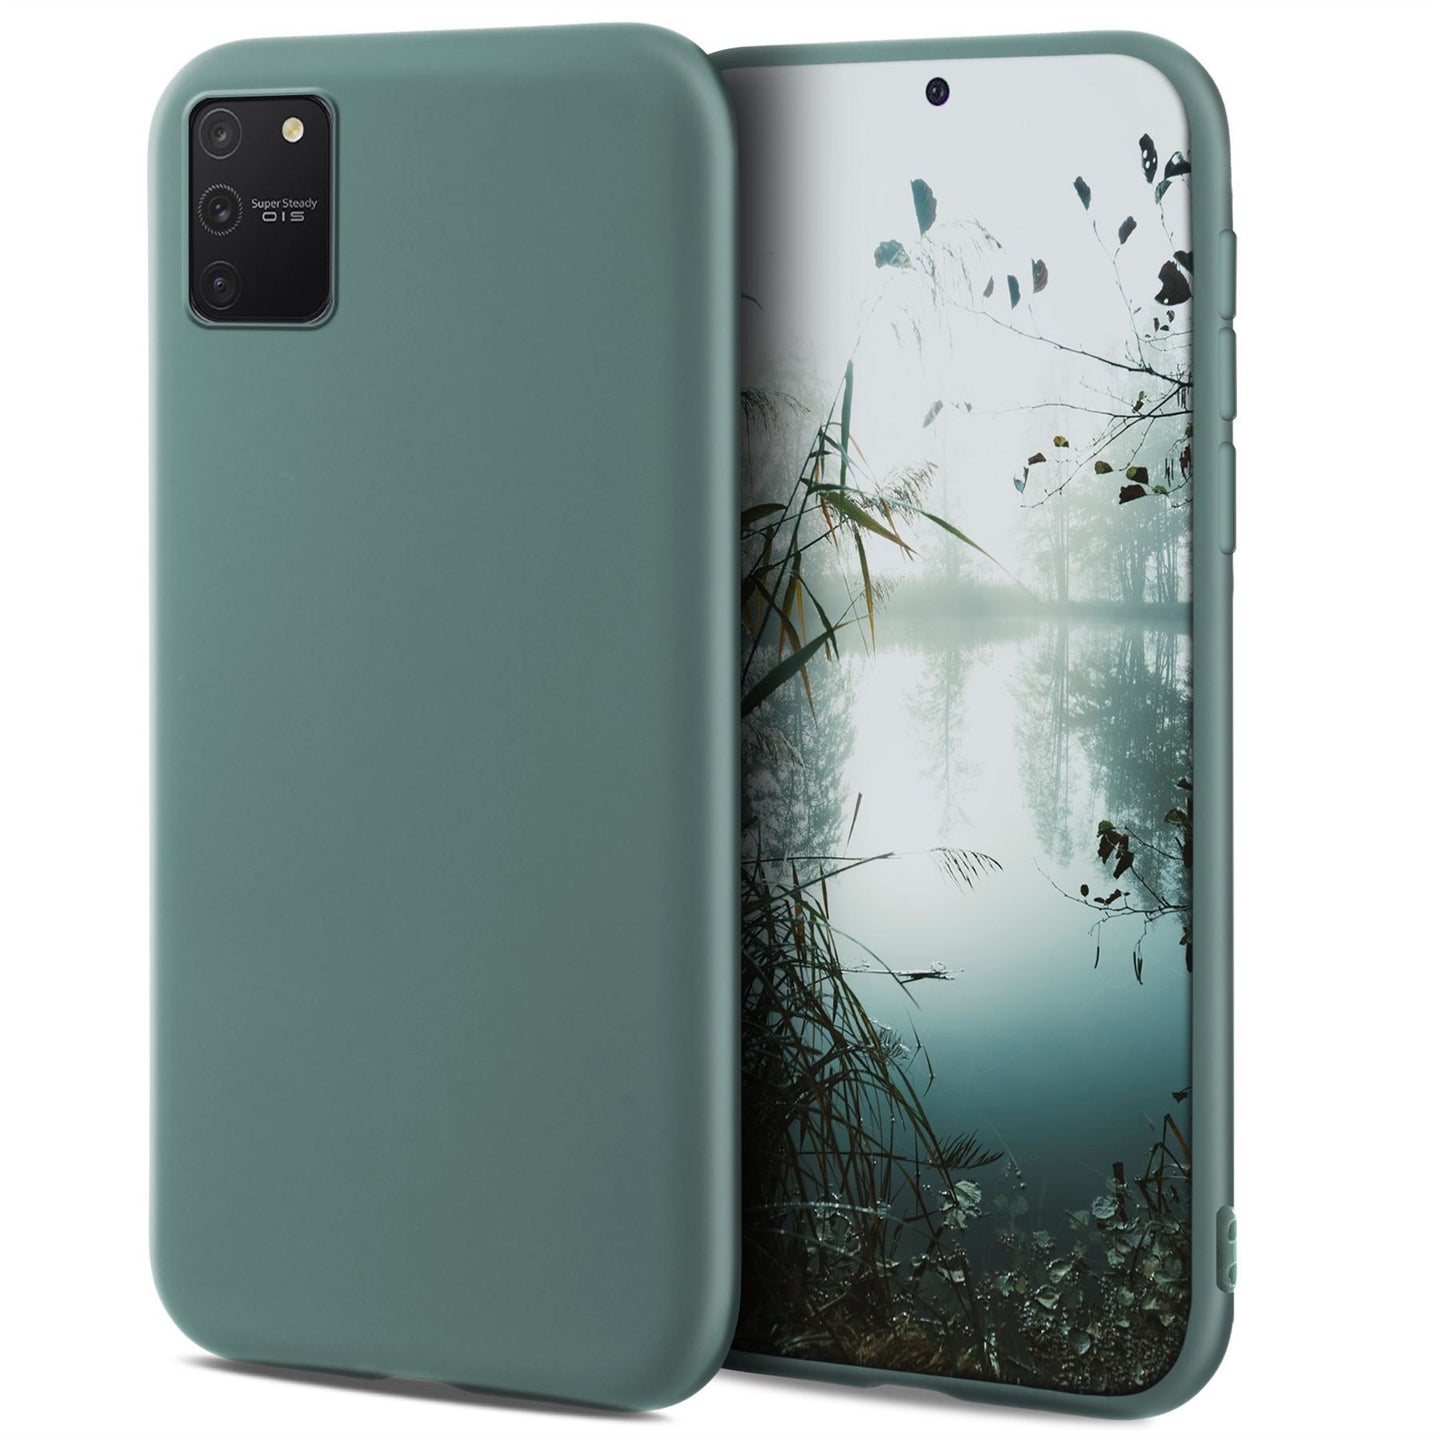 Moozy Minimalist Series Silicone Case for Samsung S10 Lite, Blue Grey - Matte Finish Slim Soft TPU Cover